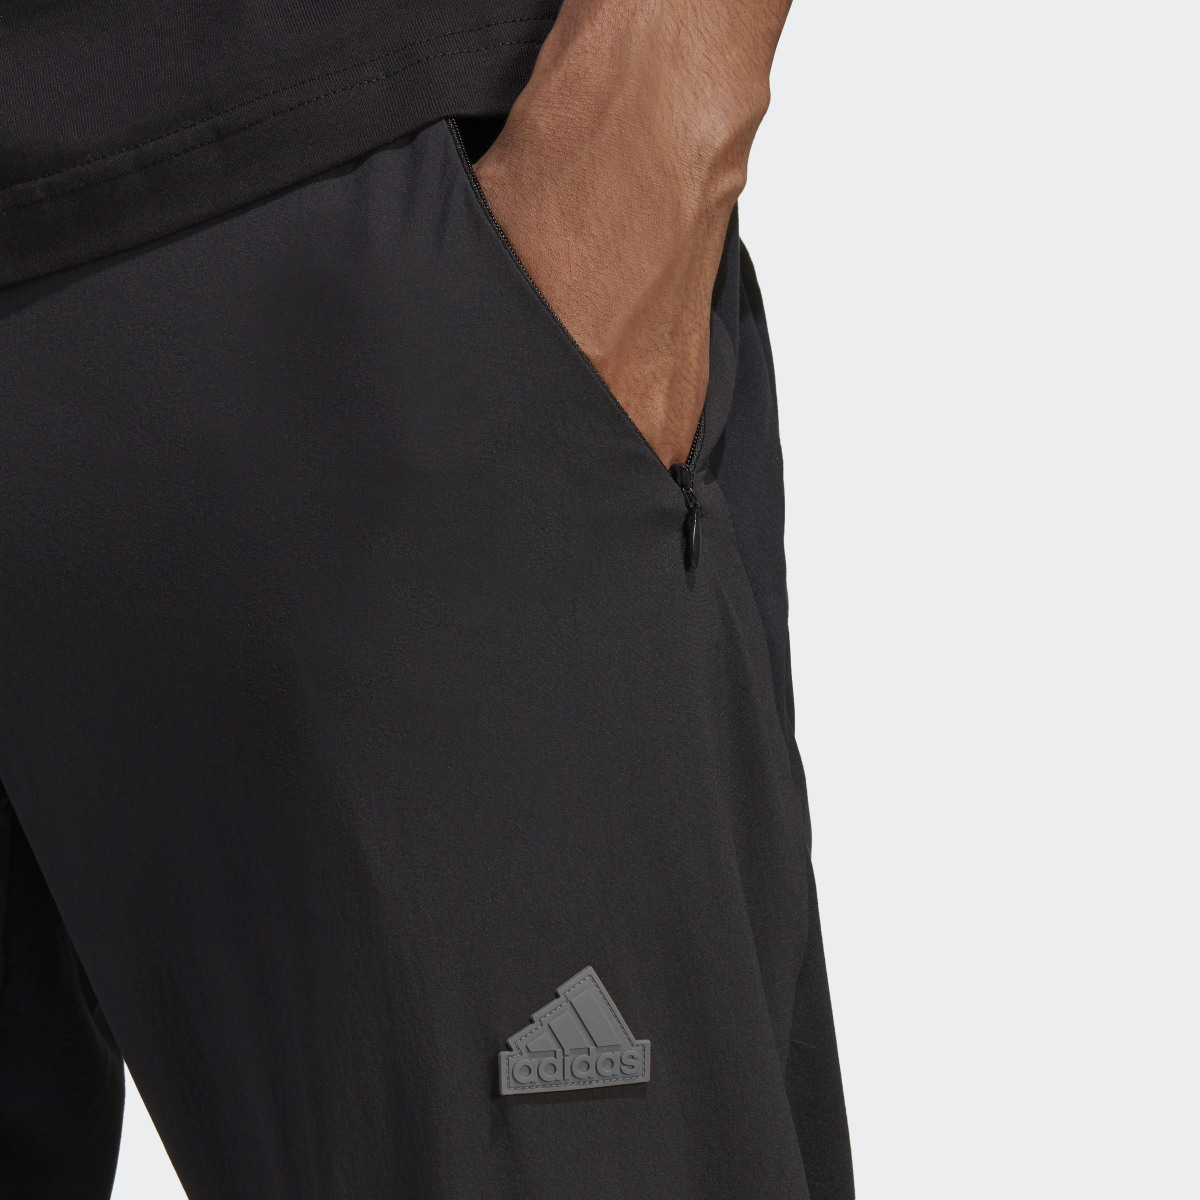 Adidas Designed 4 Gameday Pants. 5